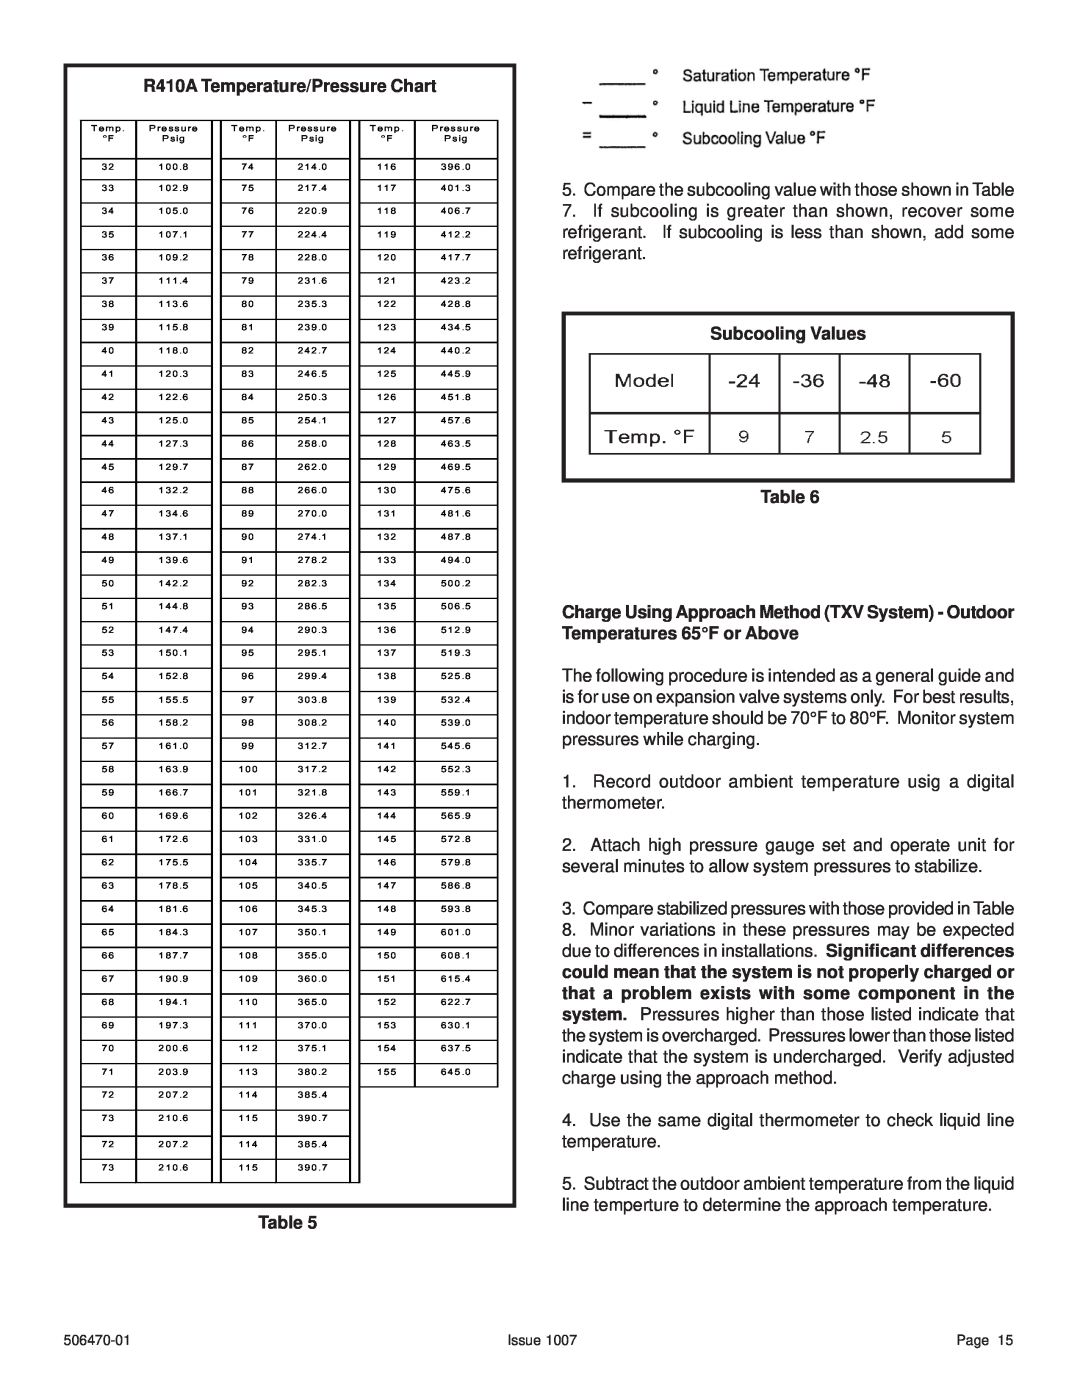 Lennox International Inc 4HP18LT manual R410A Temperature/Pressure Chart, Subcooling Values Table 